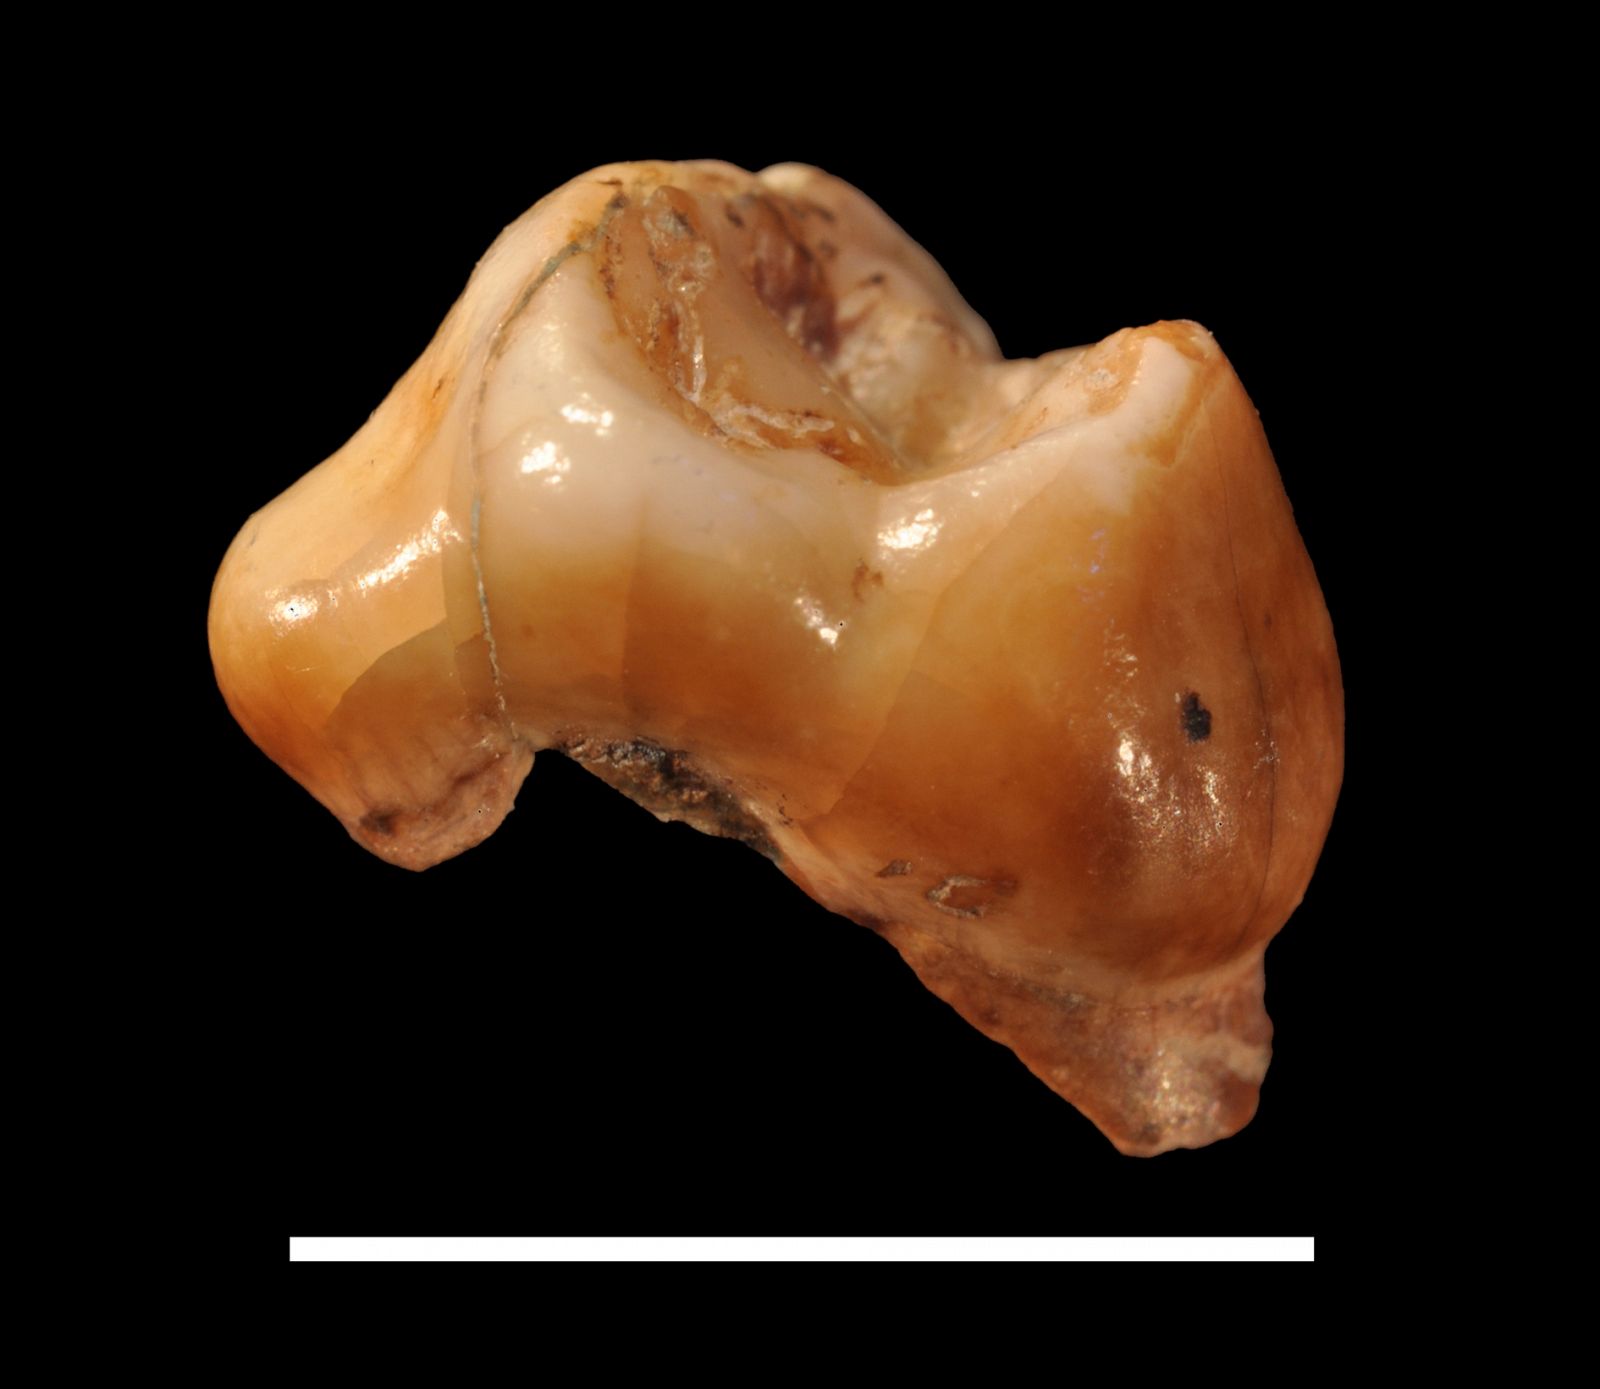 Vista mesial del specimen Cavallo-B (primer molar maxilar izquierdo decidual), el primer humano anatómicamente moderno de Europa